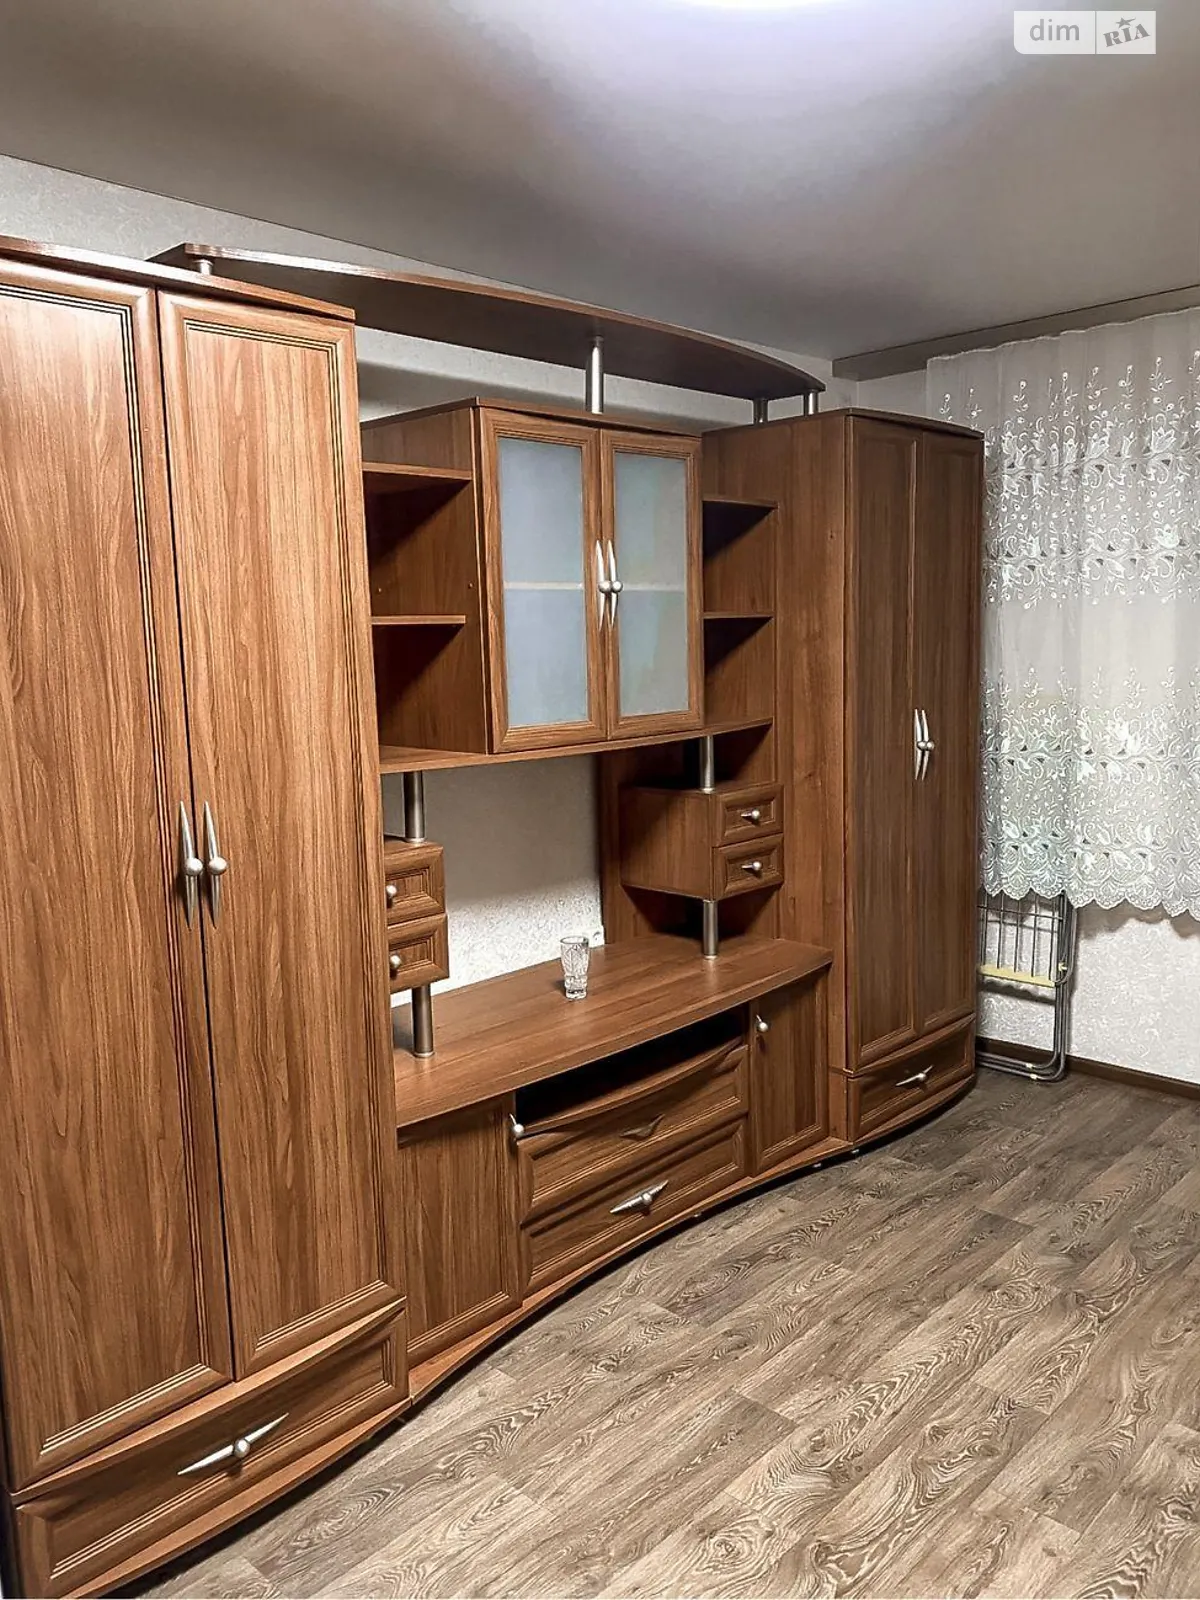 Продается комната 28 кв. м в Харькове - фото 3